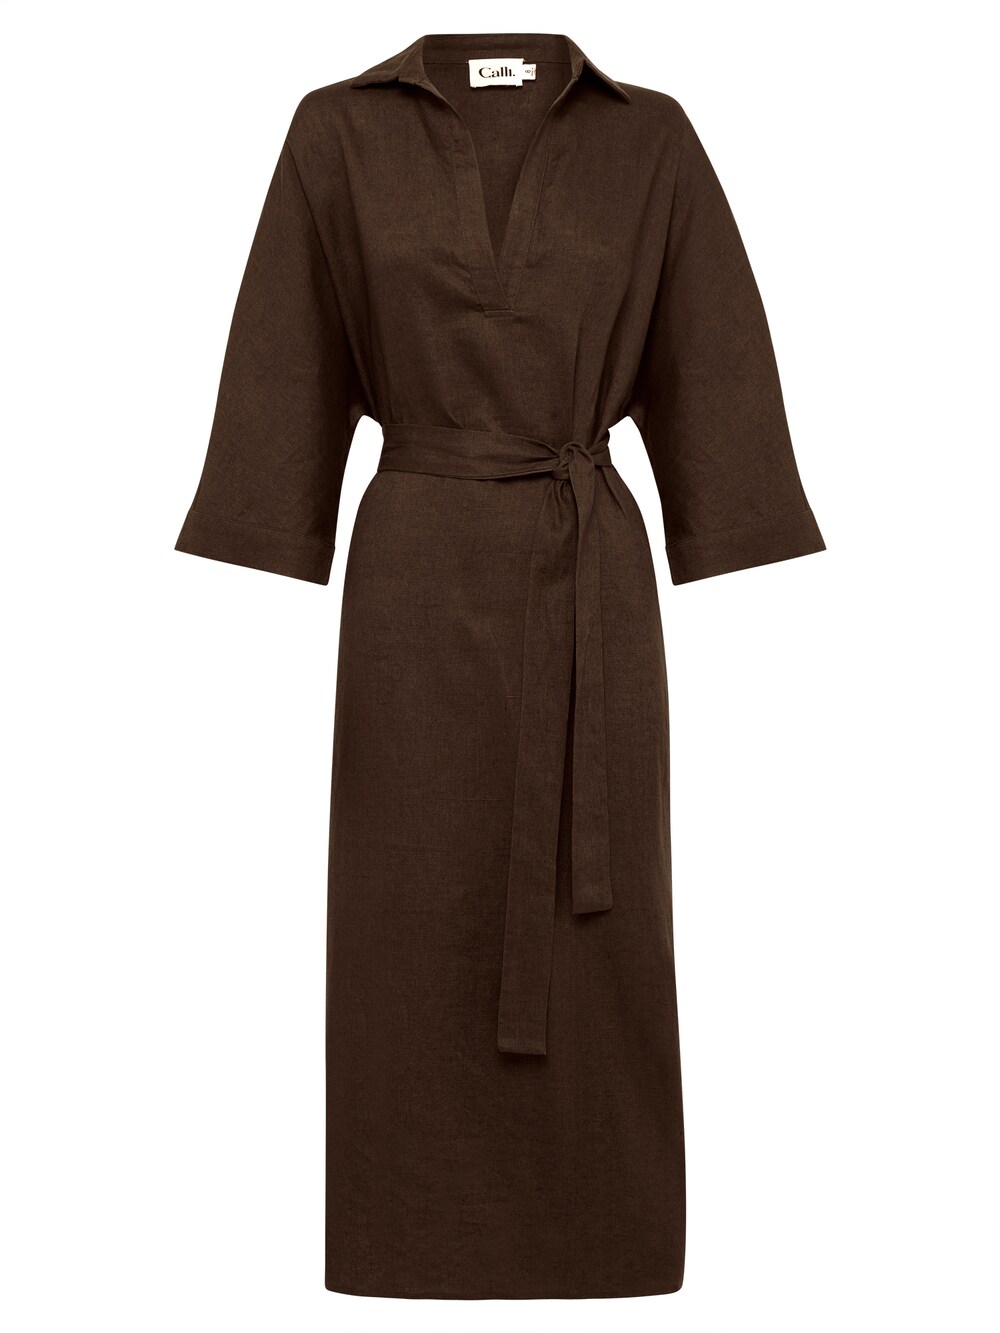 Рубашка-платье Calli DOM, коричневый